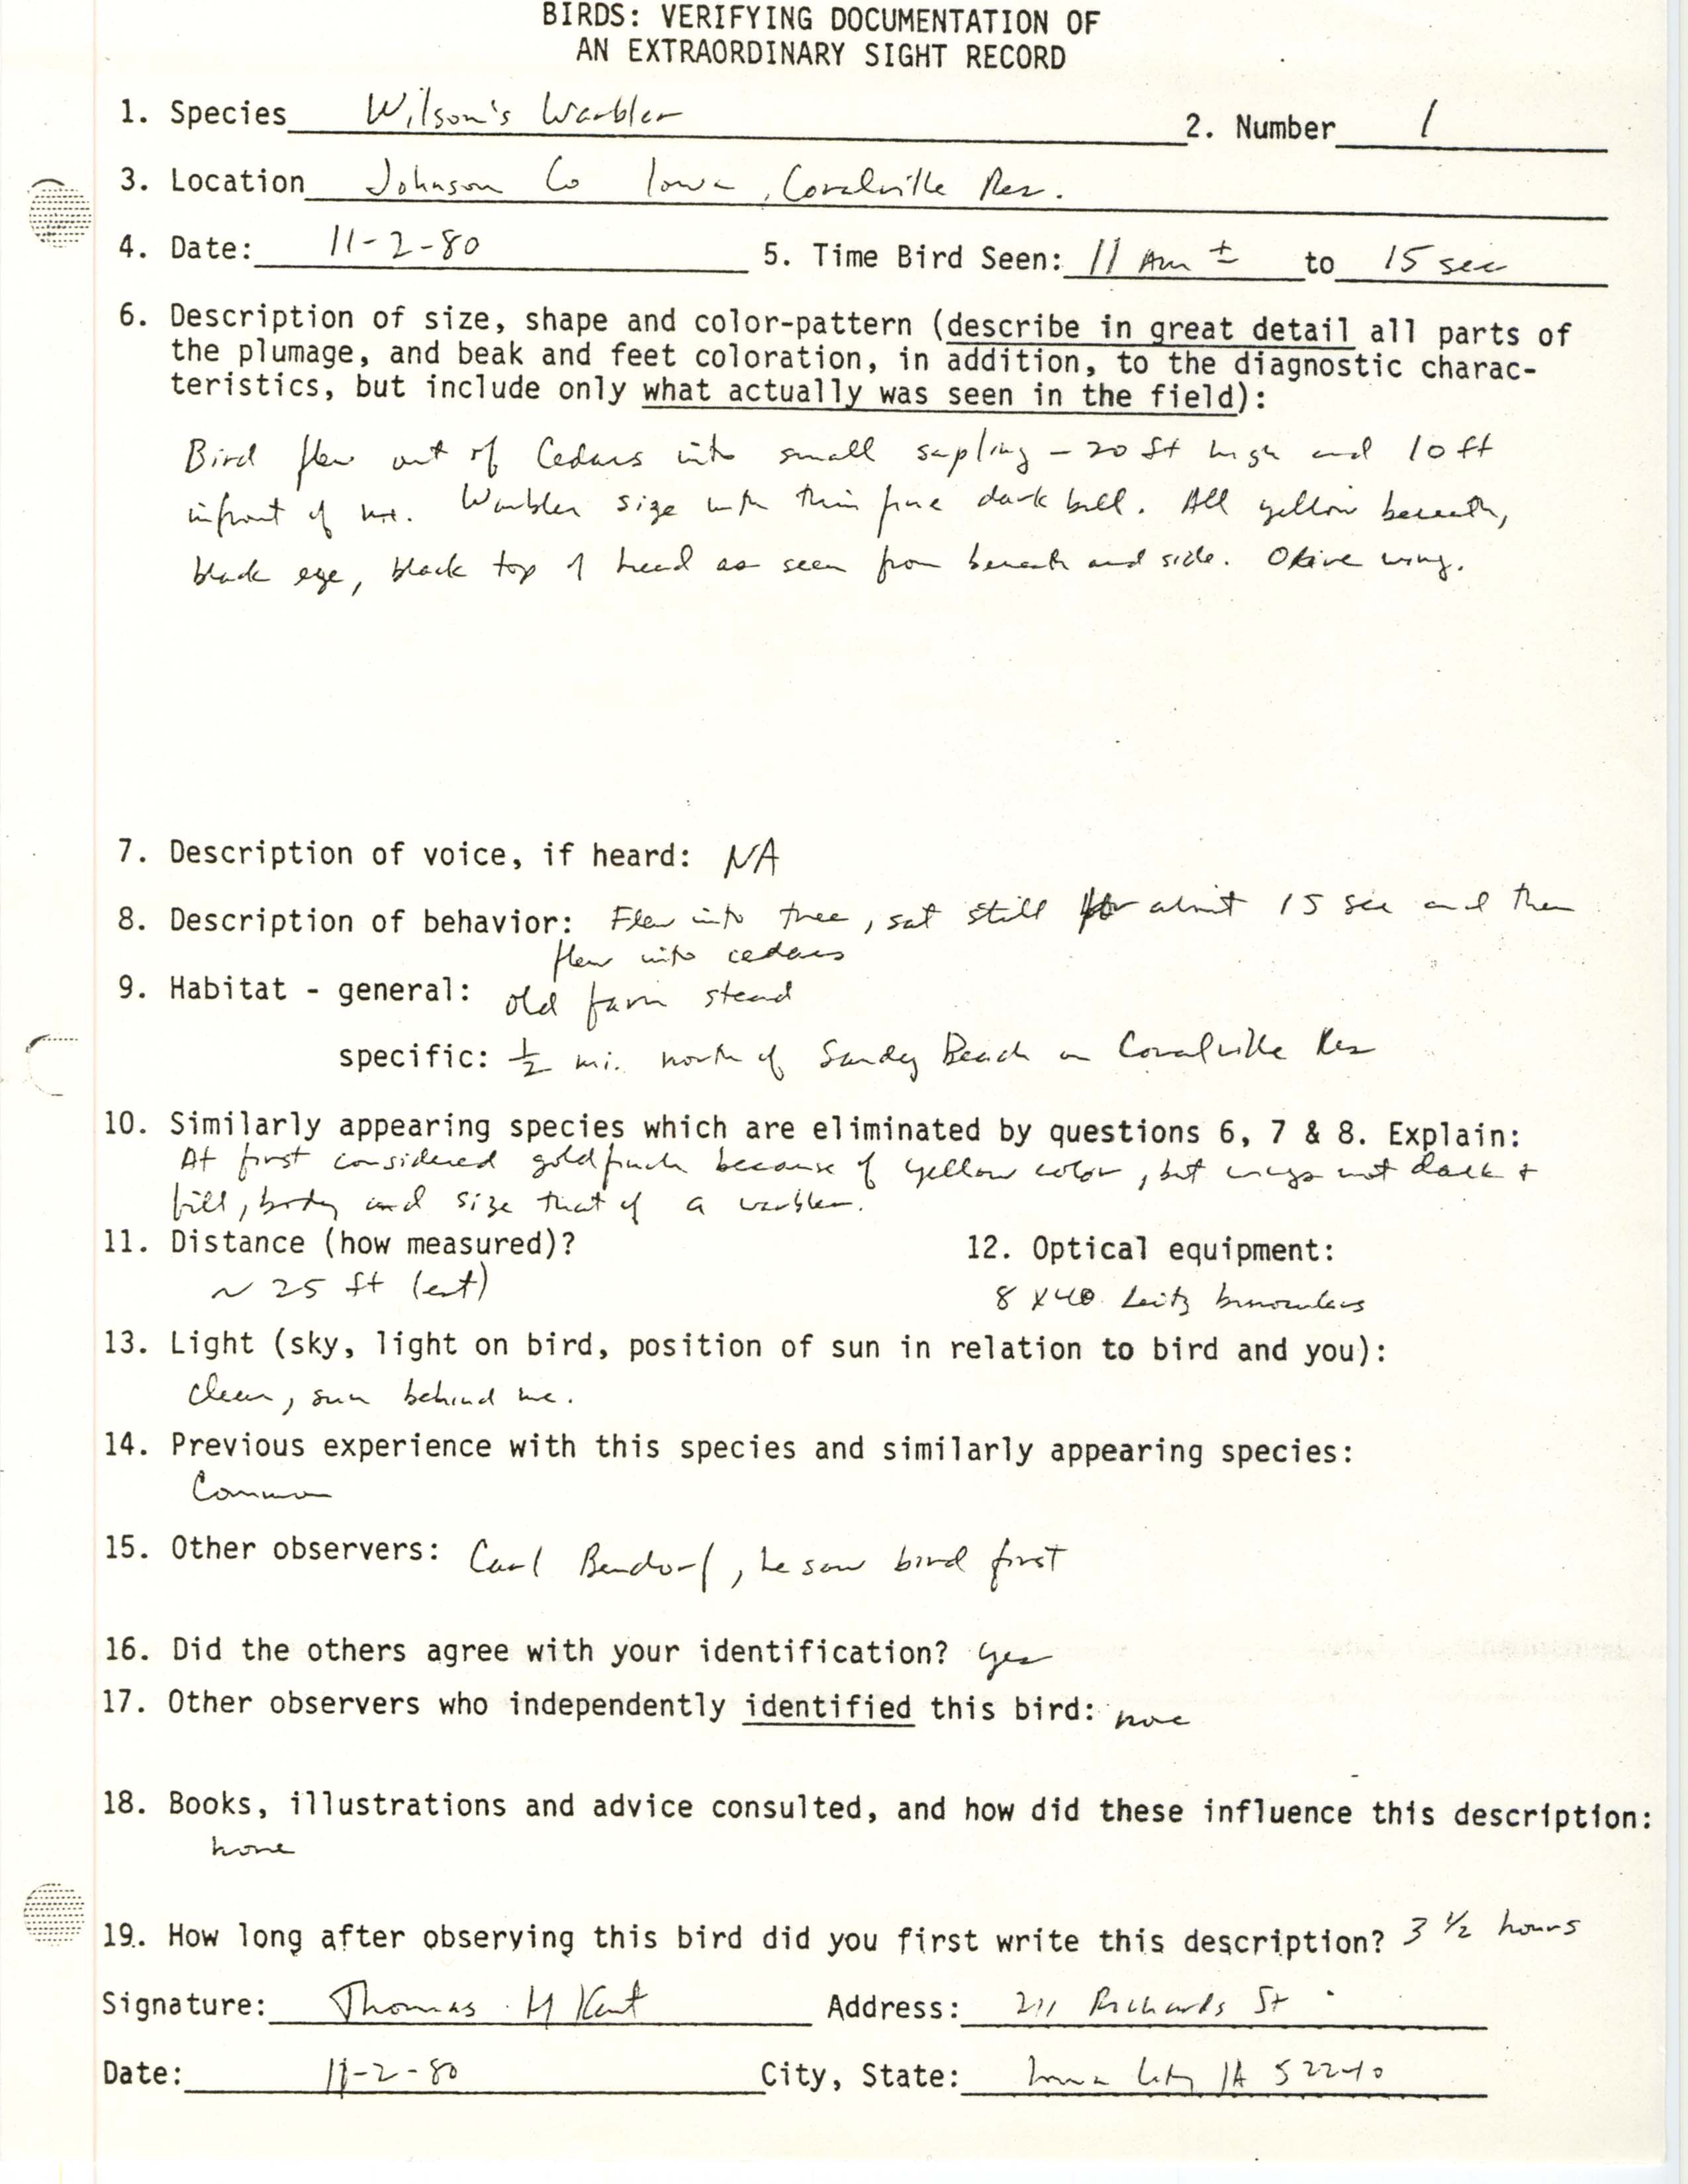 Rare bird documentation form for Wilson's Warbler at Coralville Reservoir, 1980